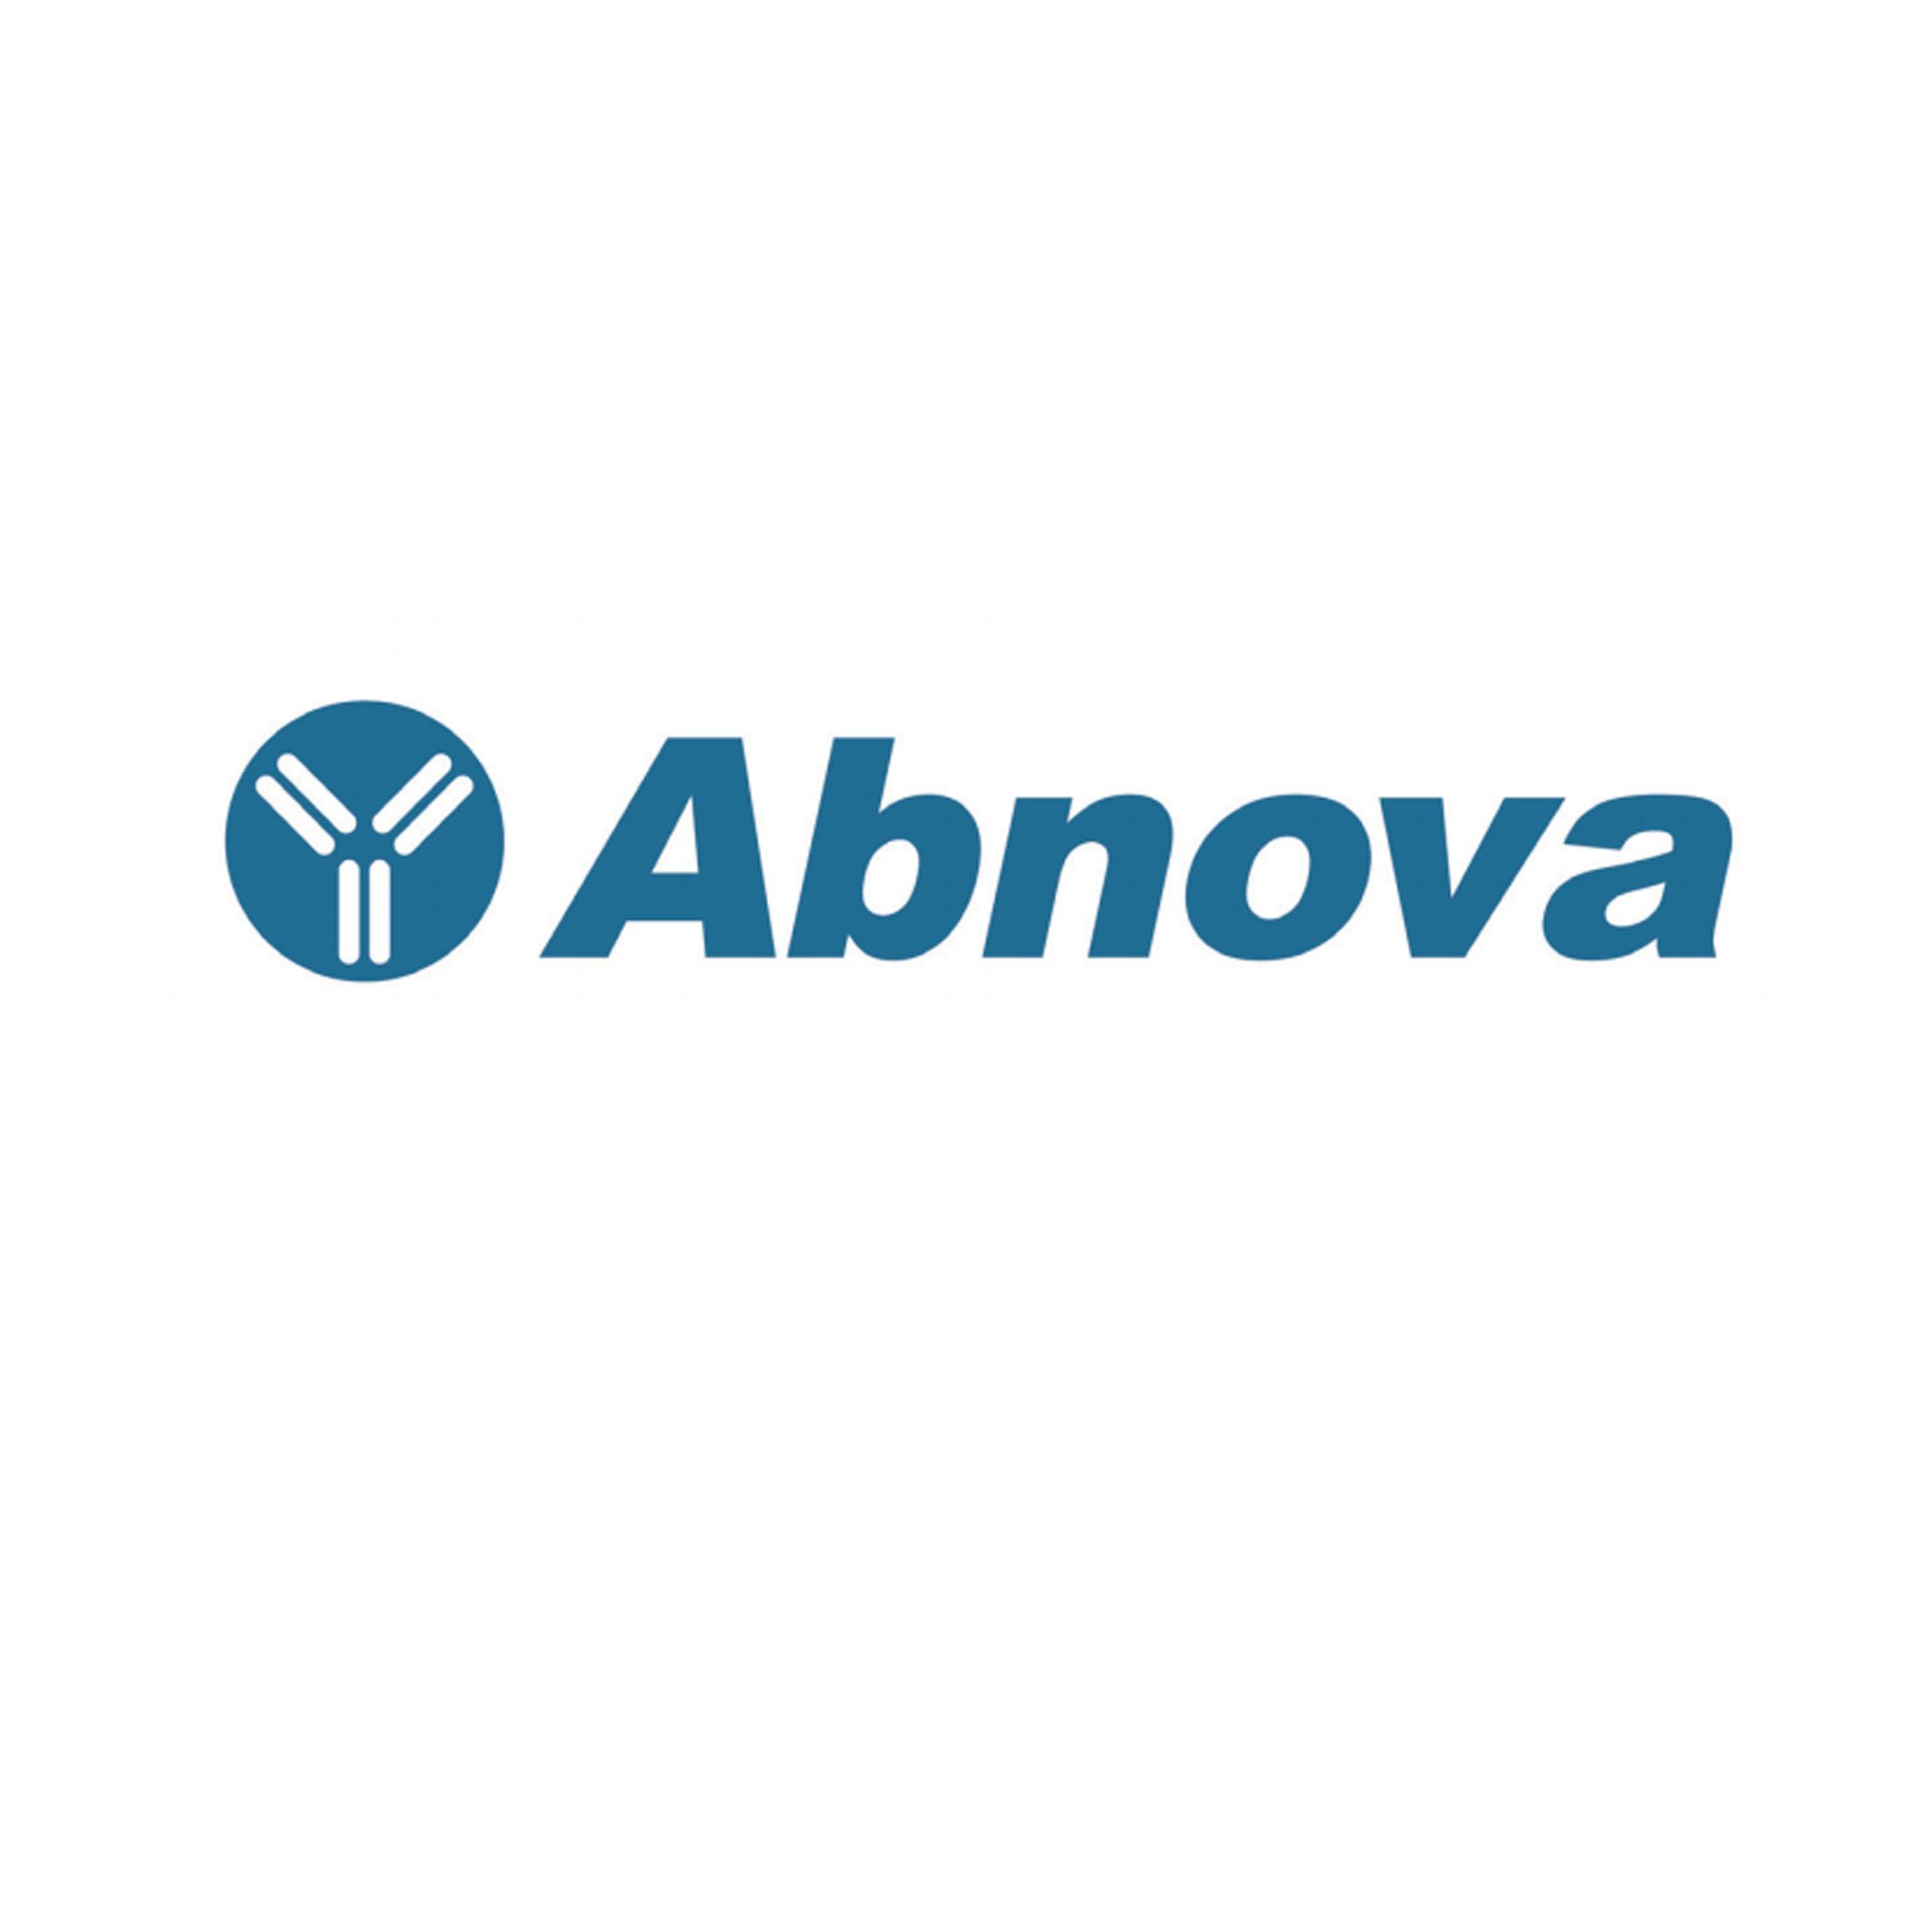 Abnova抗体、ELISA试剂盒、原位杂交荧光探针、无表达蛋白定量等等产品简介